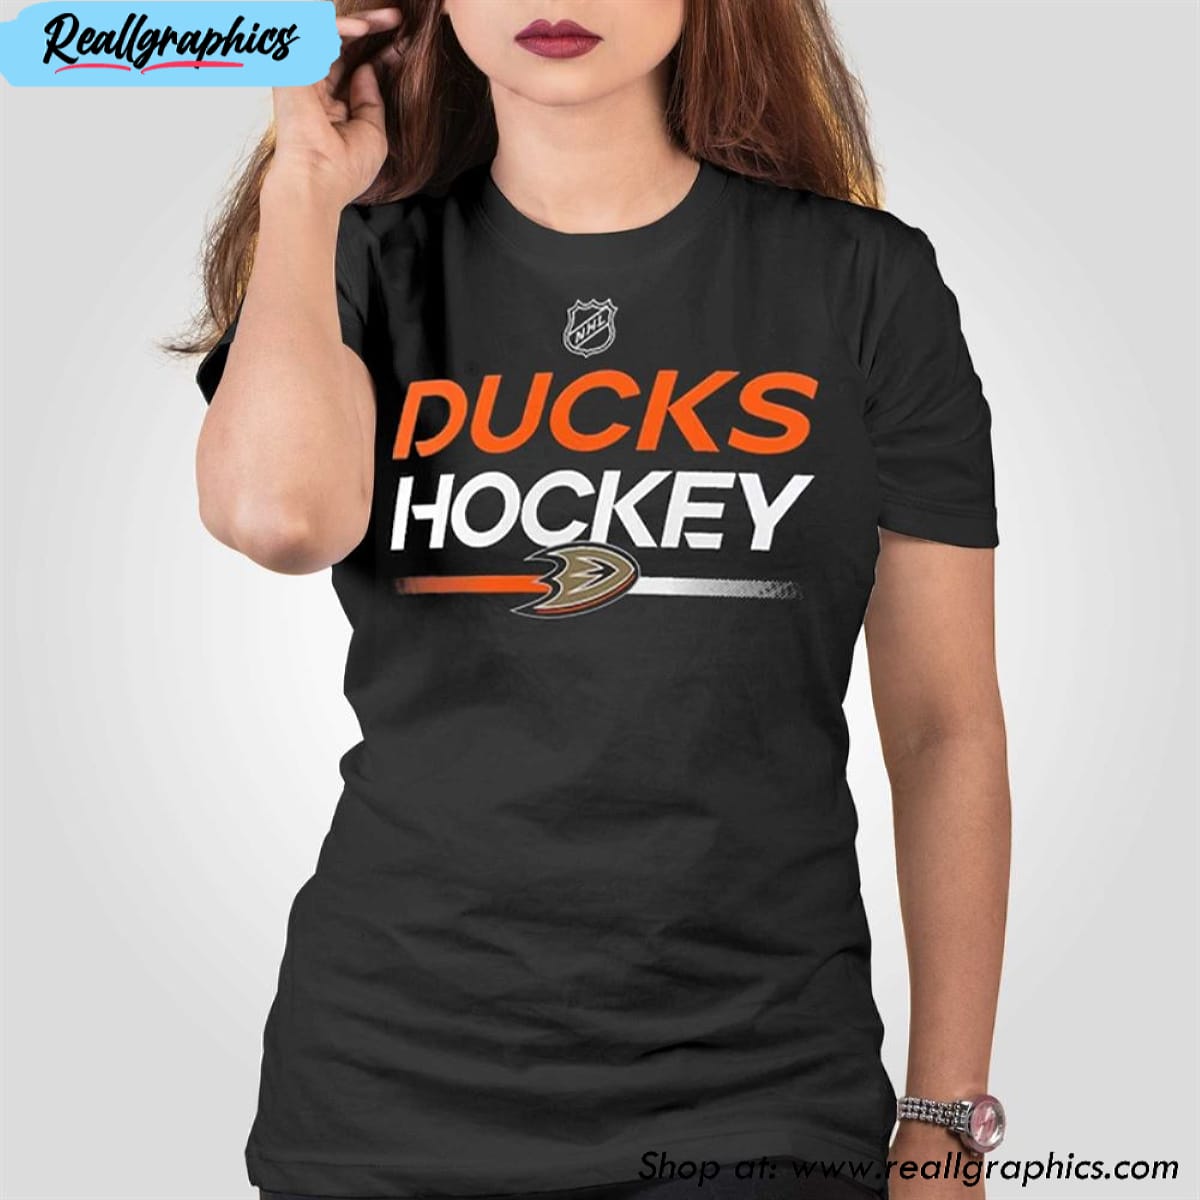 Anaheim Ducks Gear, Ducks Jerseys, Anaheim Ducks Clothing, Ducks Pro Shop,  Ducks Hockey Apparel